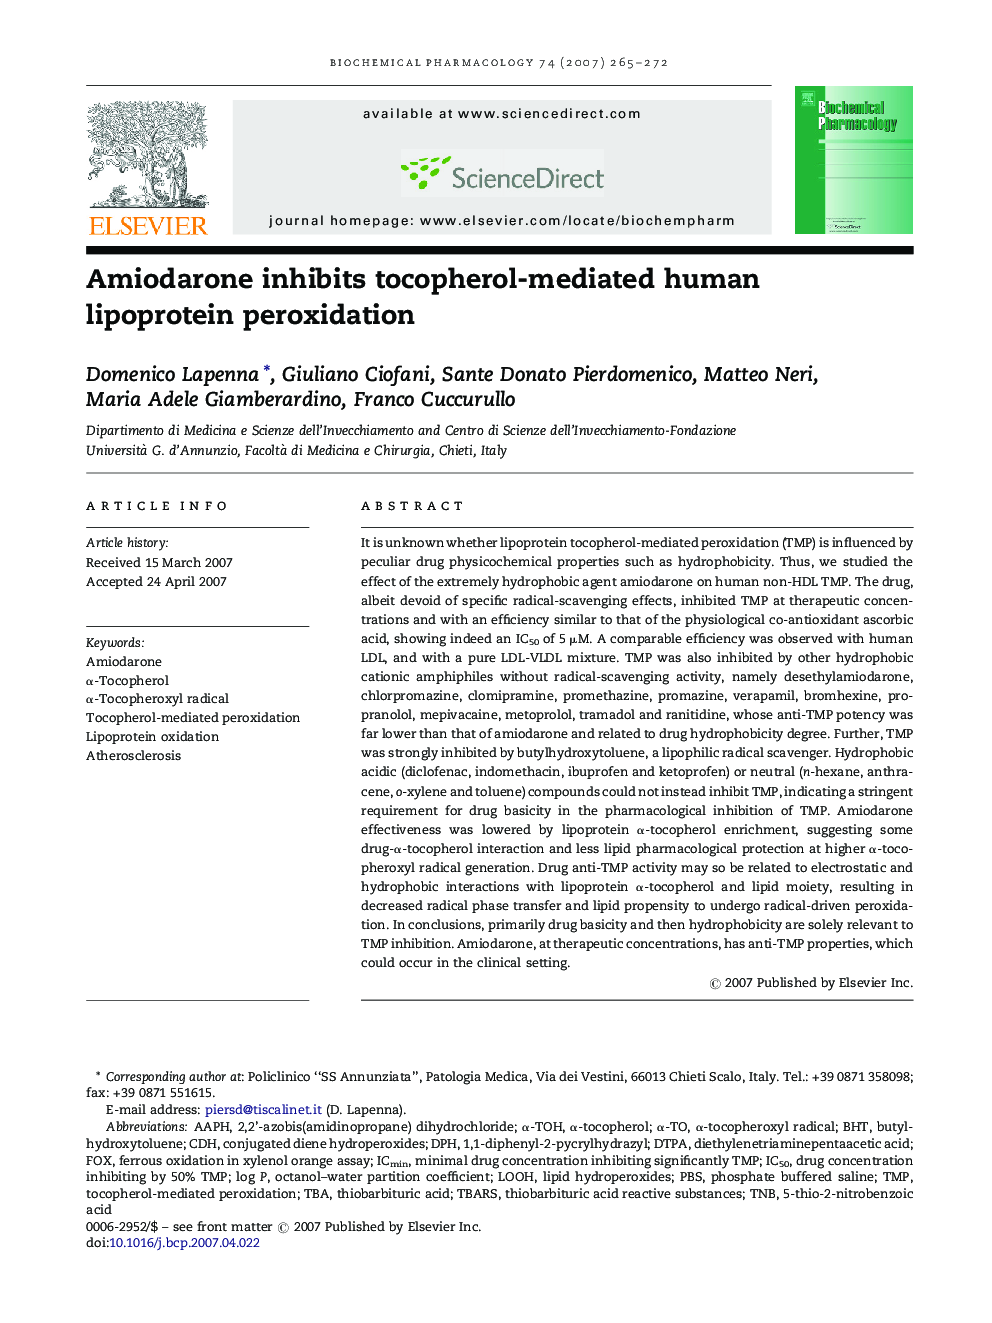 Amiodarone inhibits tocopherol-mediated human lipoprotein peroxidation